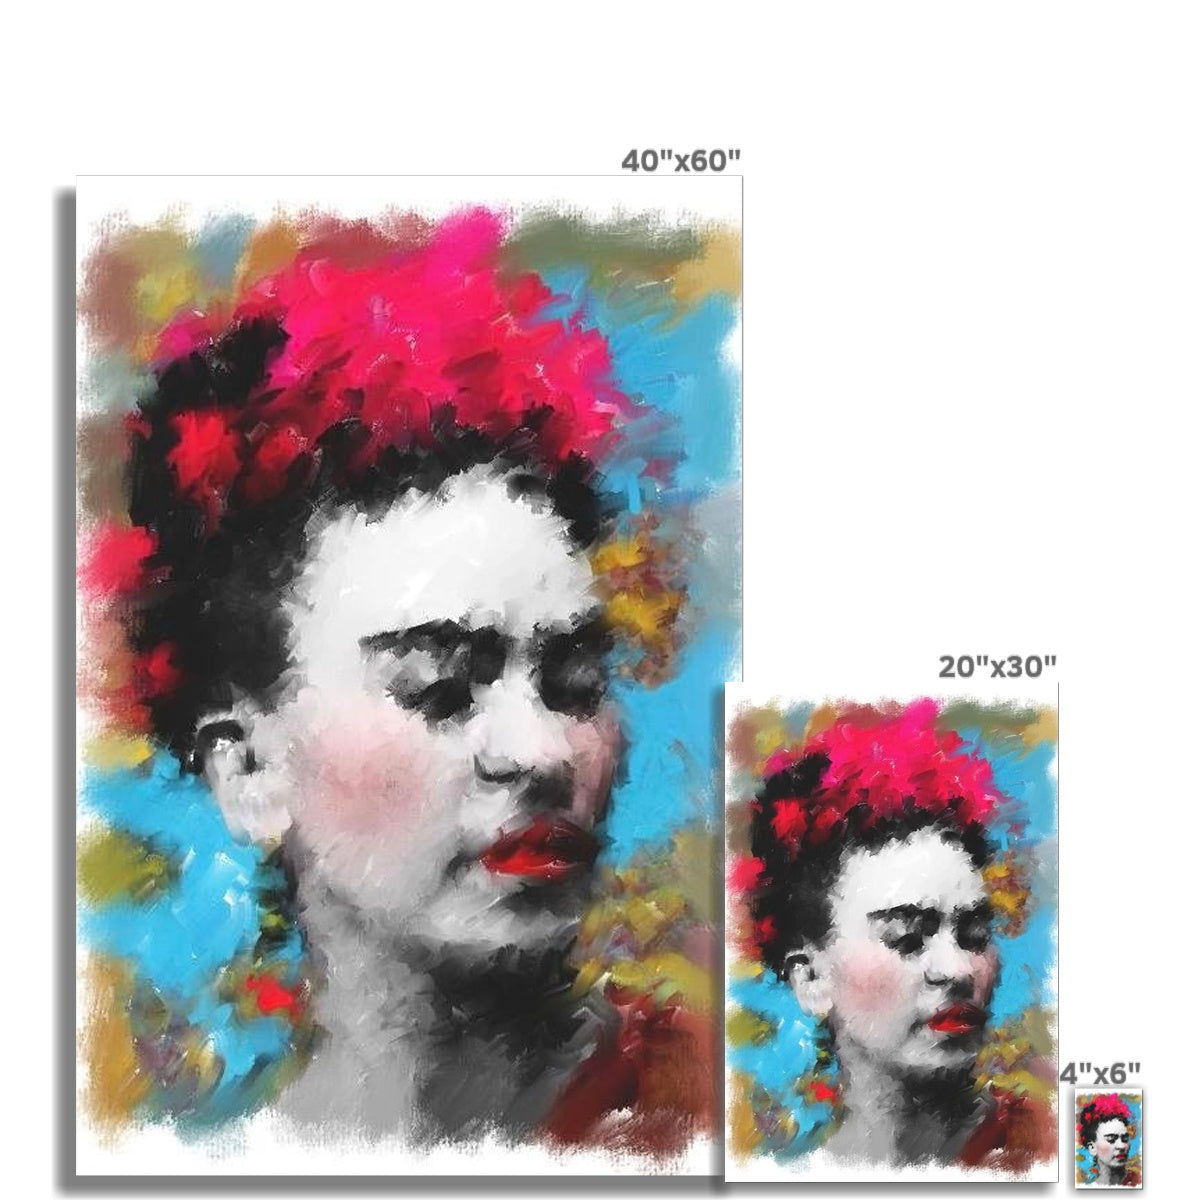 Frida Kahlo - Portrait Hahnemühle German Etching Print